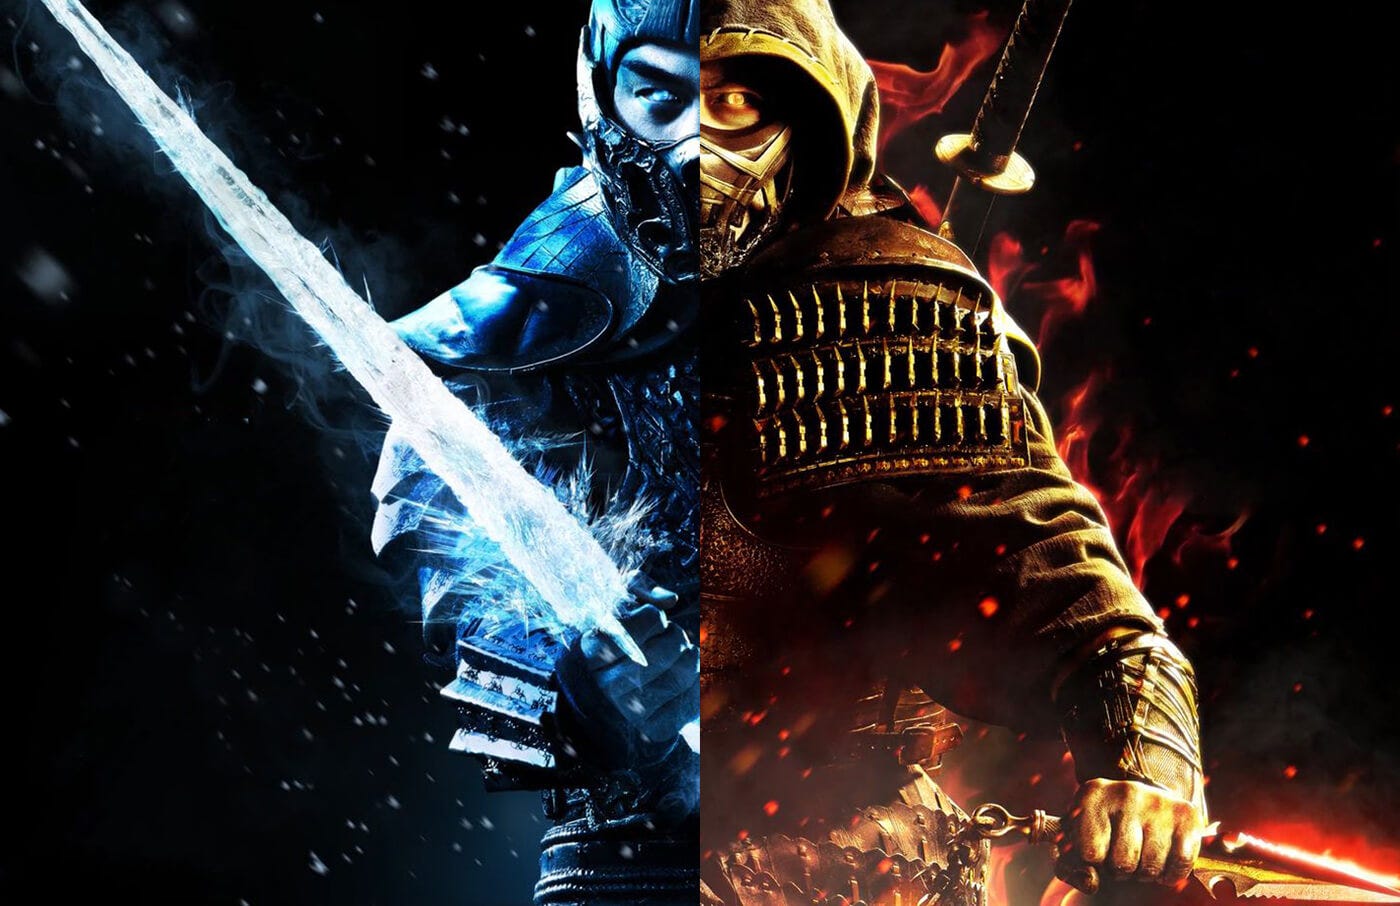 Mortal Kombat 1995 VS Mortal Kombat 2021 